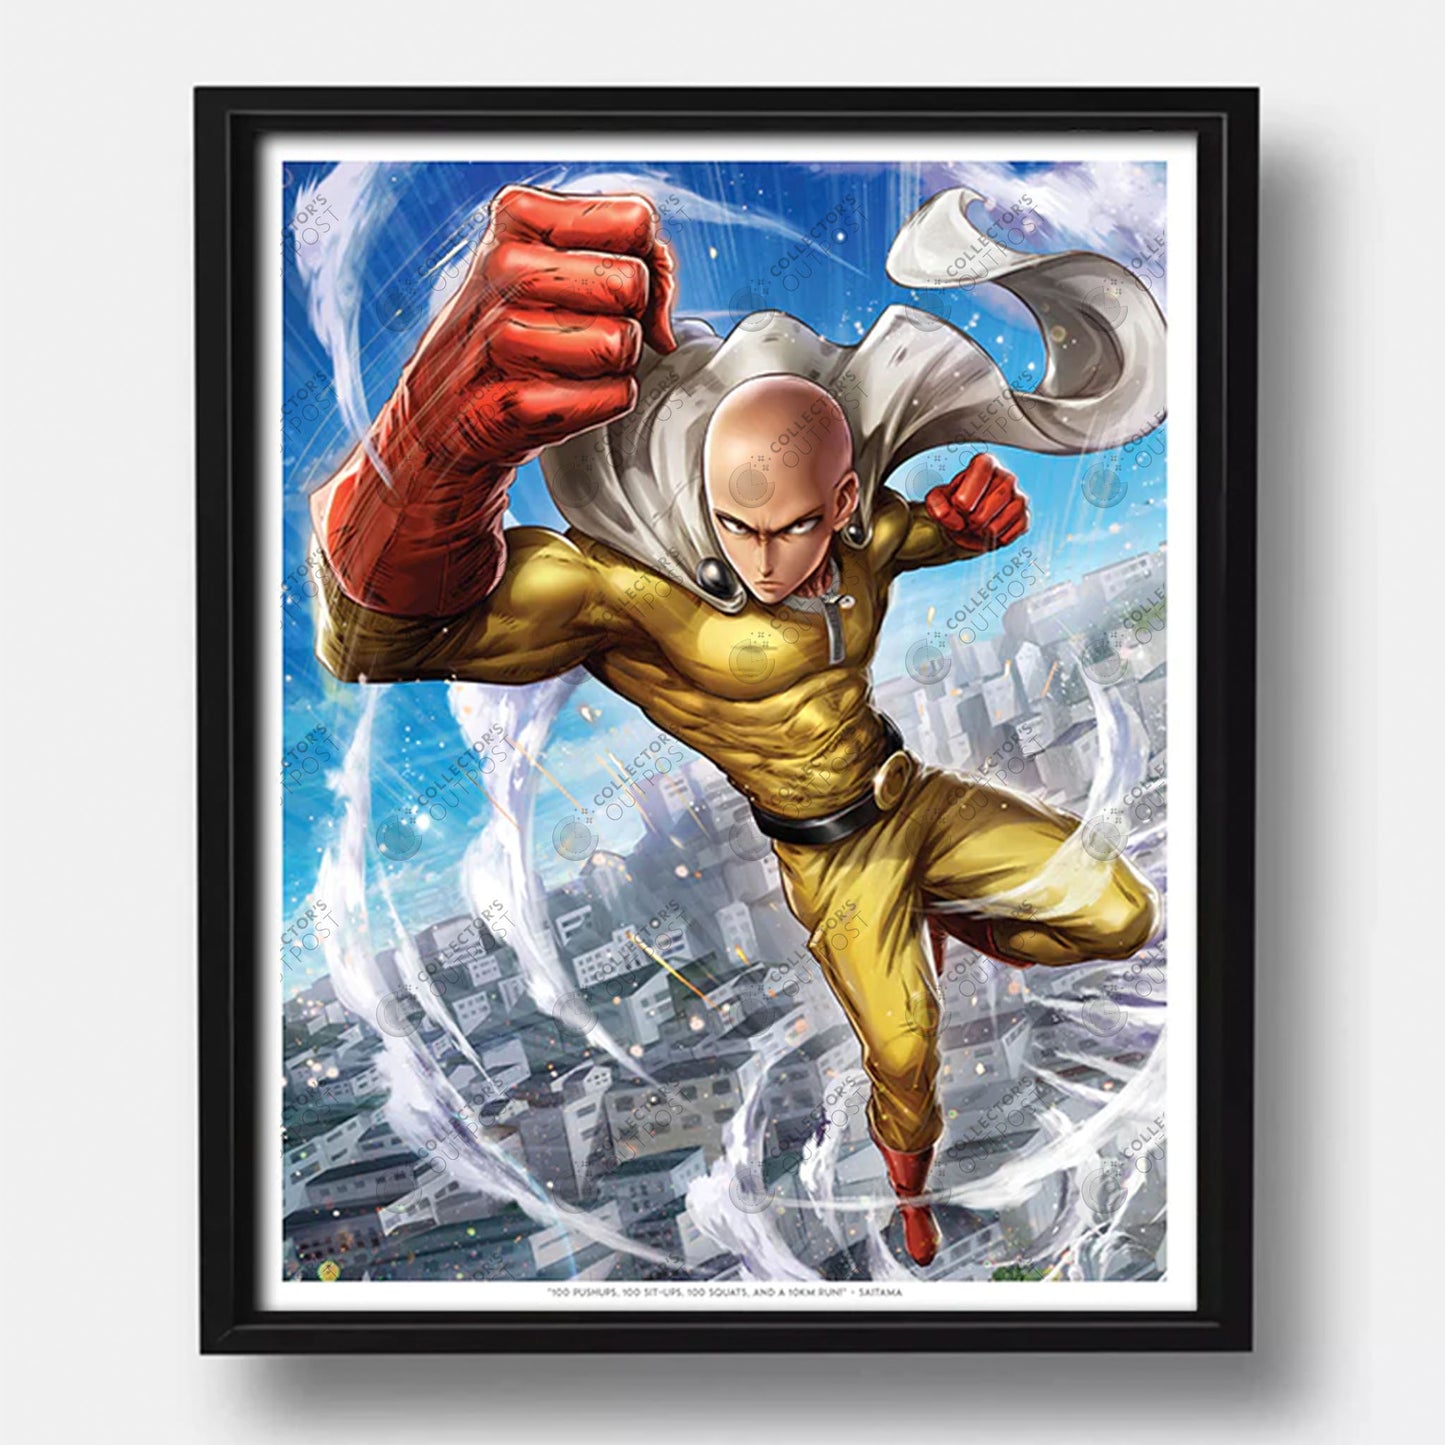 Saitama "Too Strong" (One Punch Man) Premium Art Print